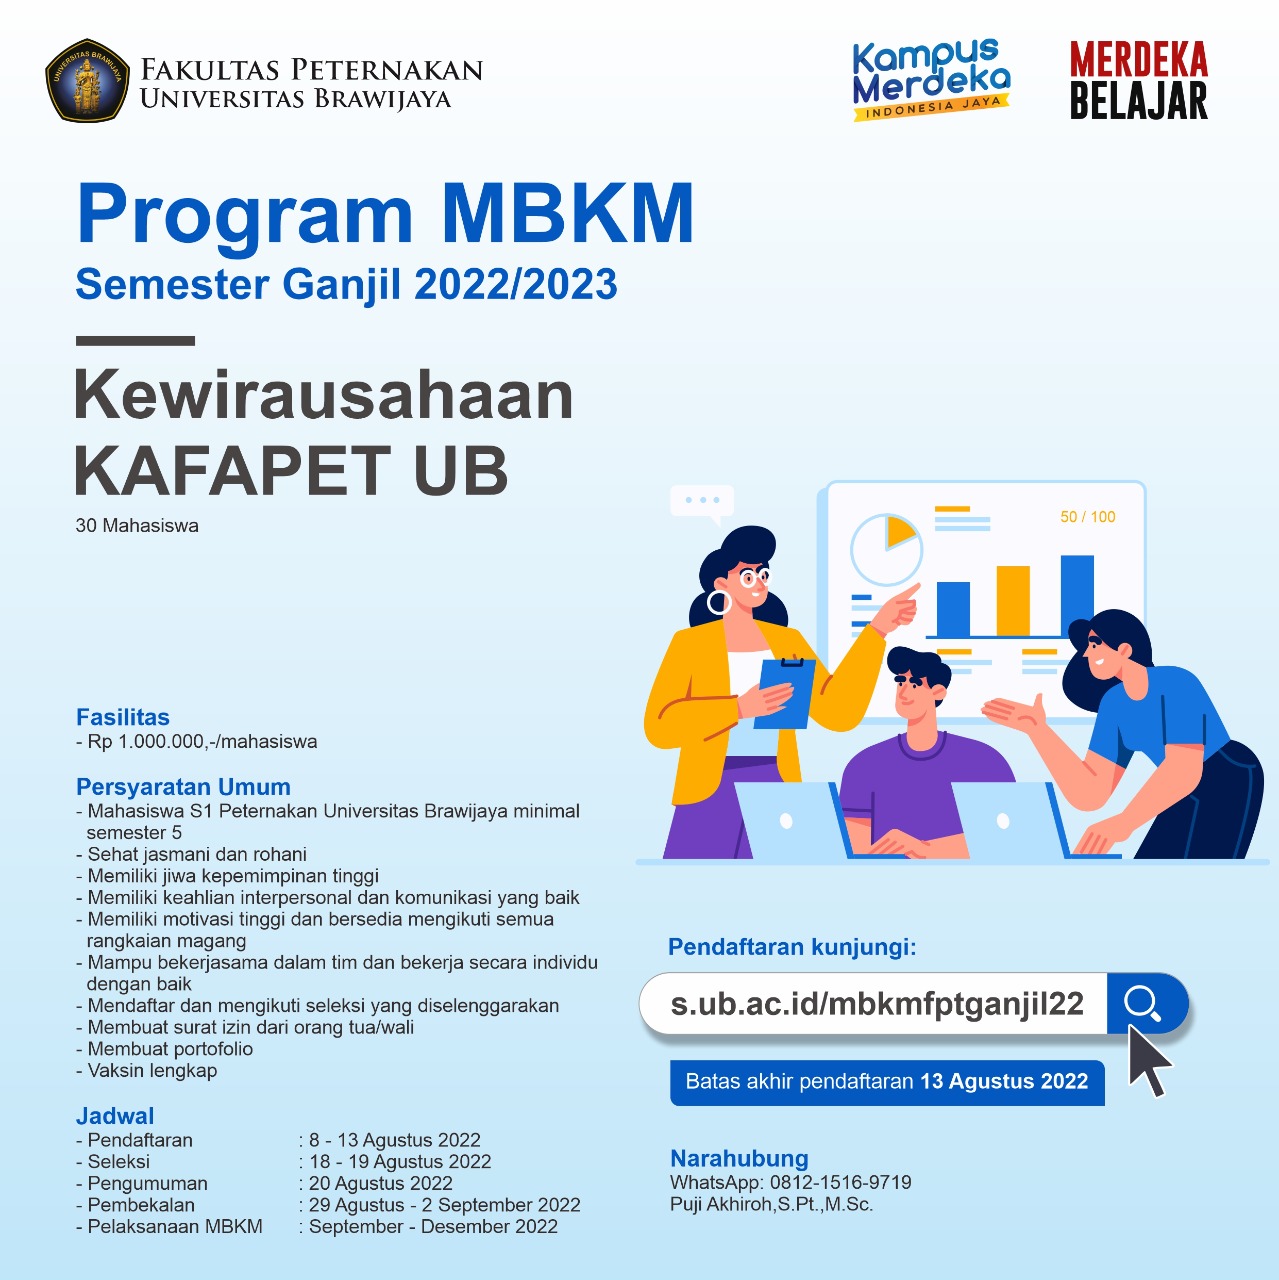 MBKM Program Odd Semester 2022/2023 Kewirausahaan KAFAPET UB